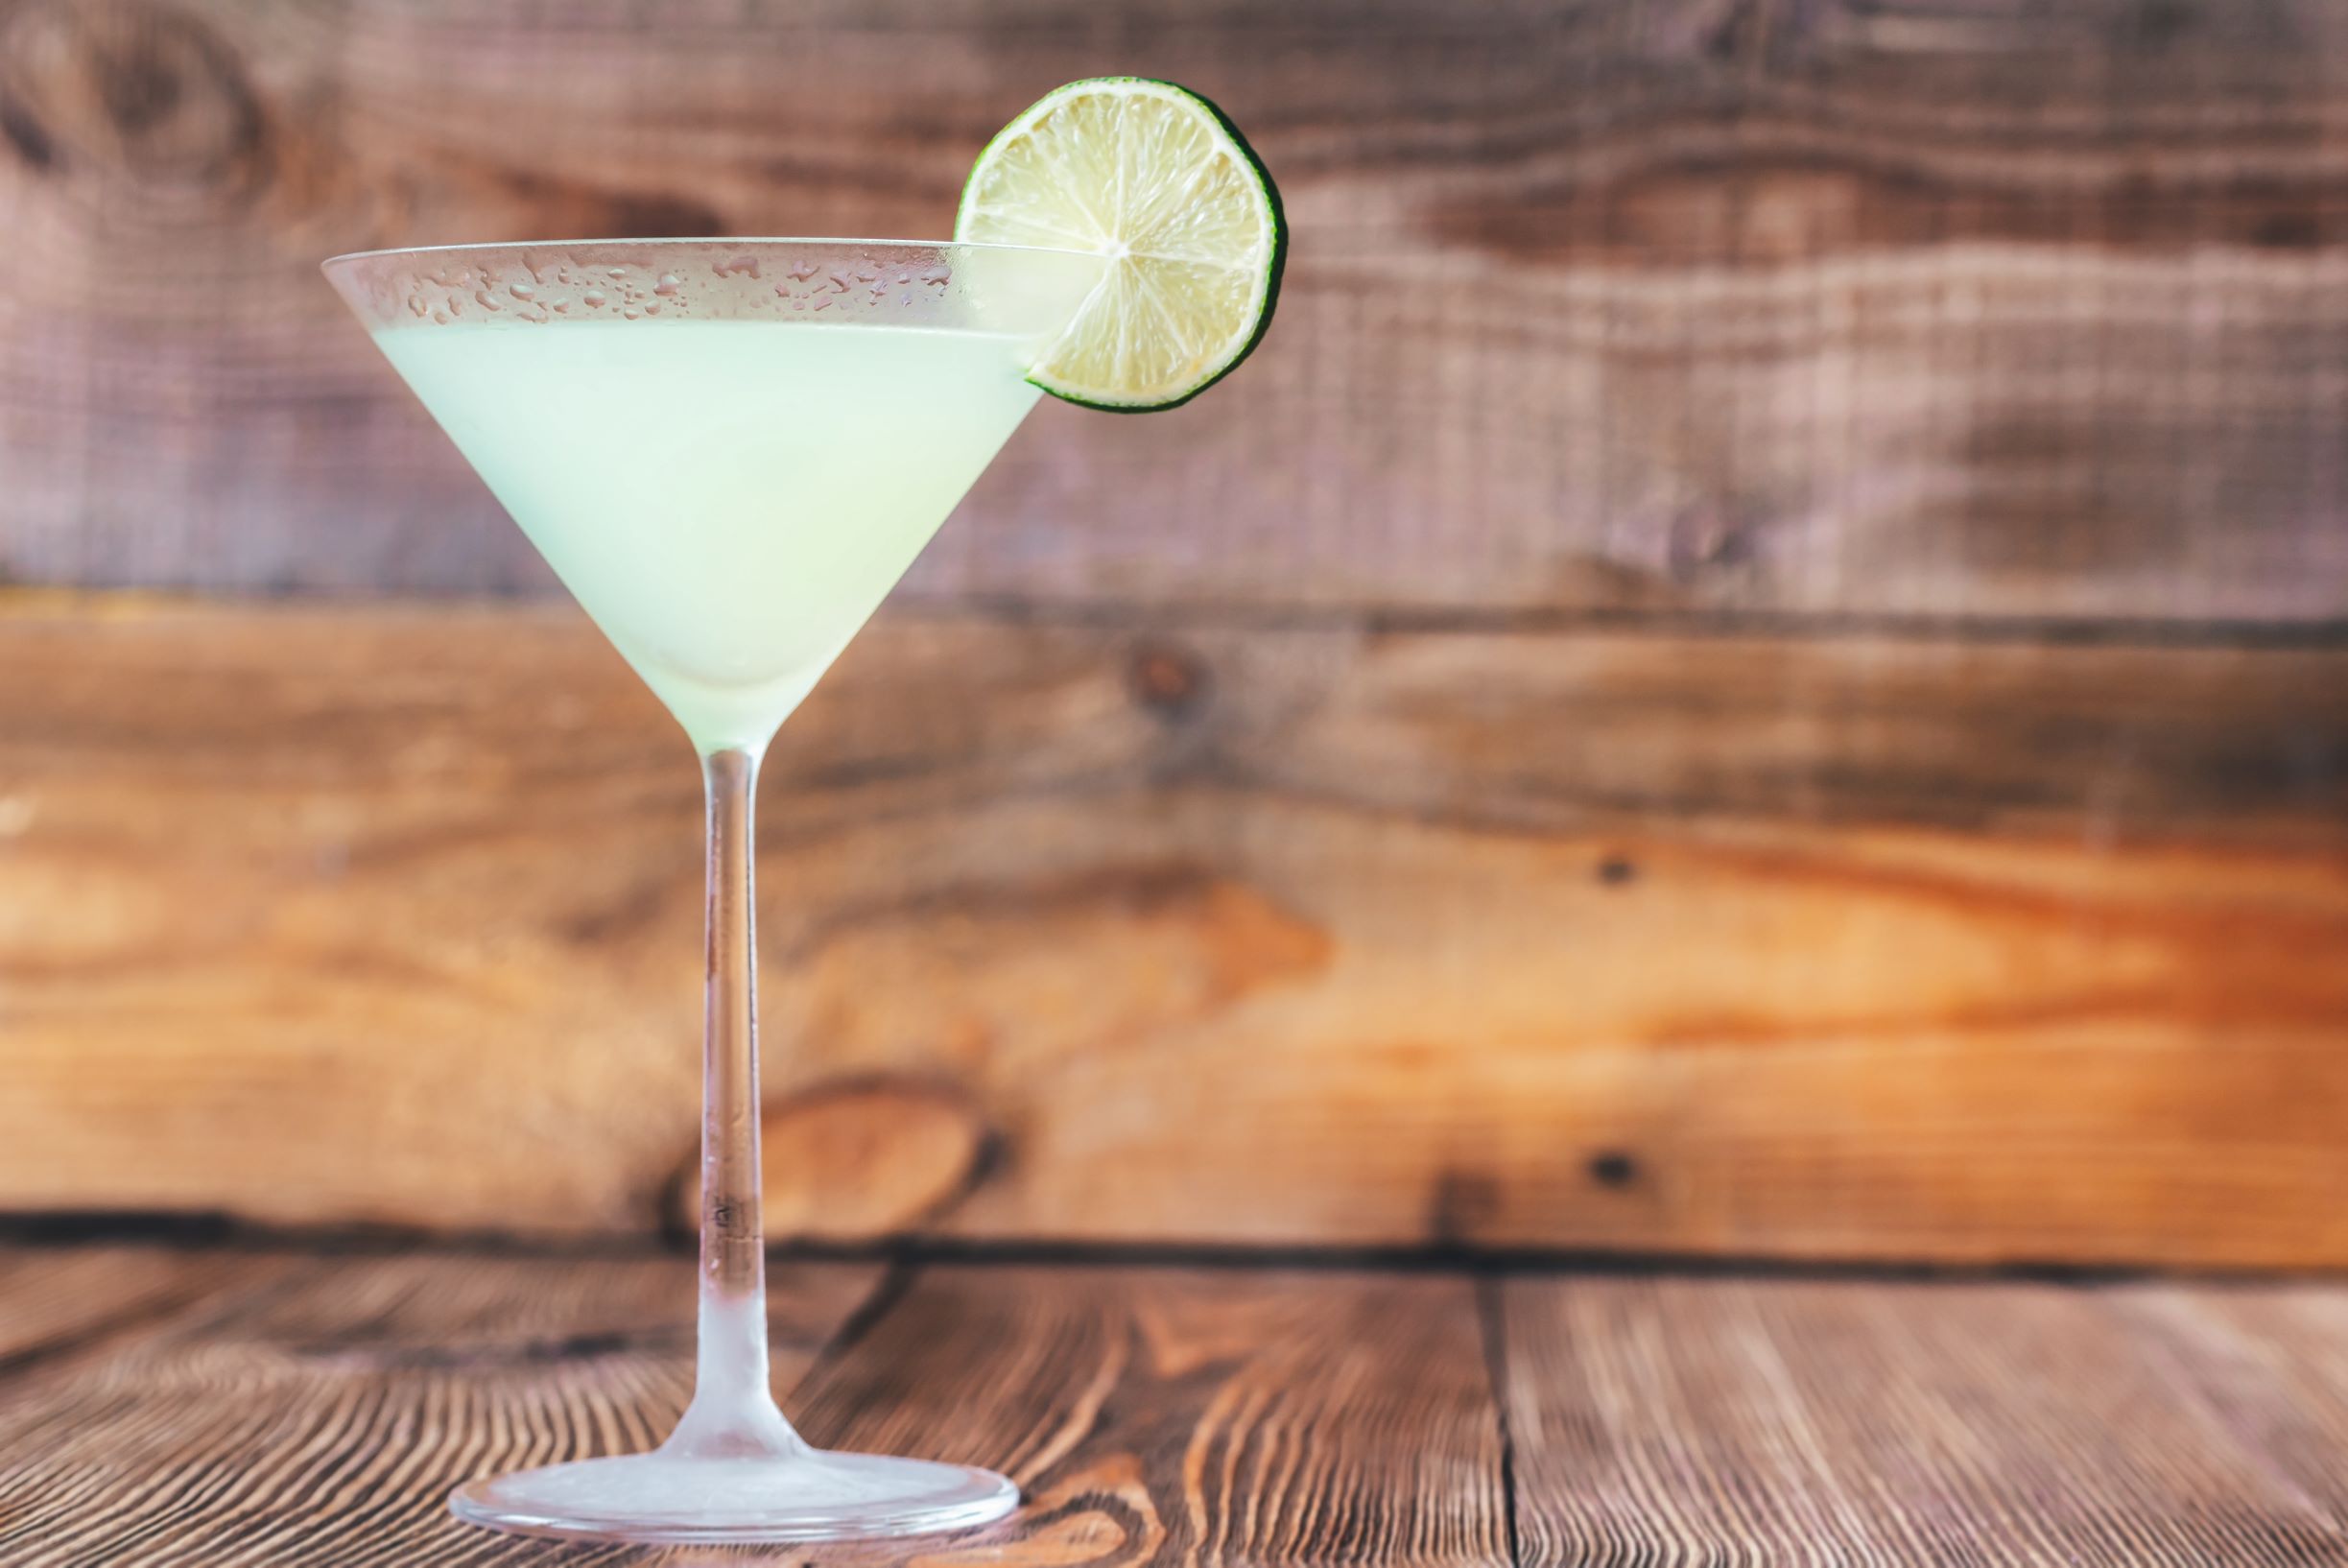 Classic daiquiri cocktail in a martini glass against wooden background